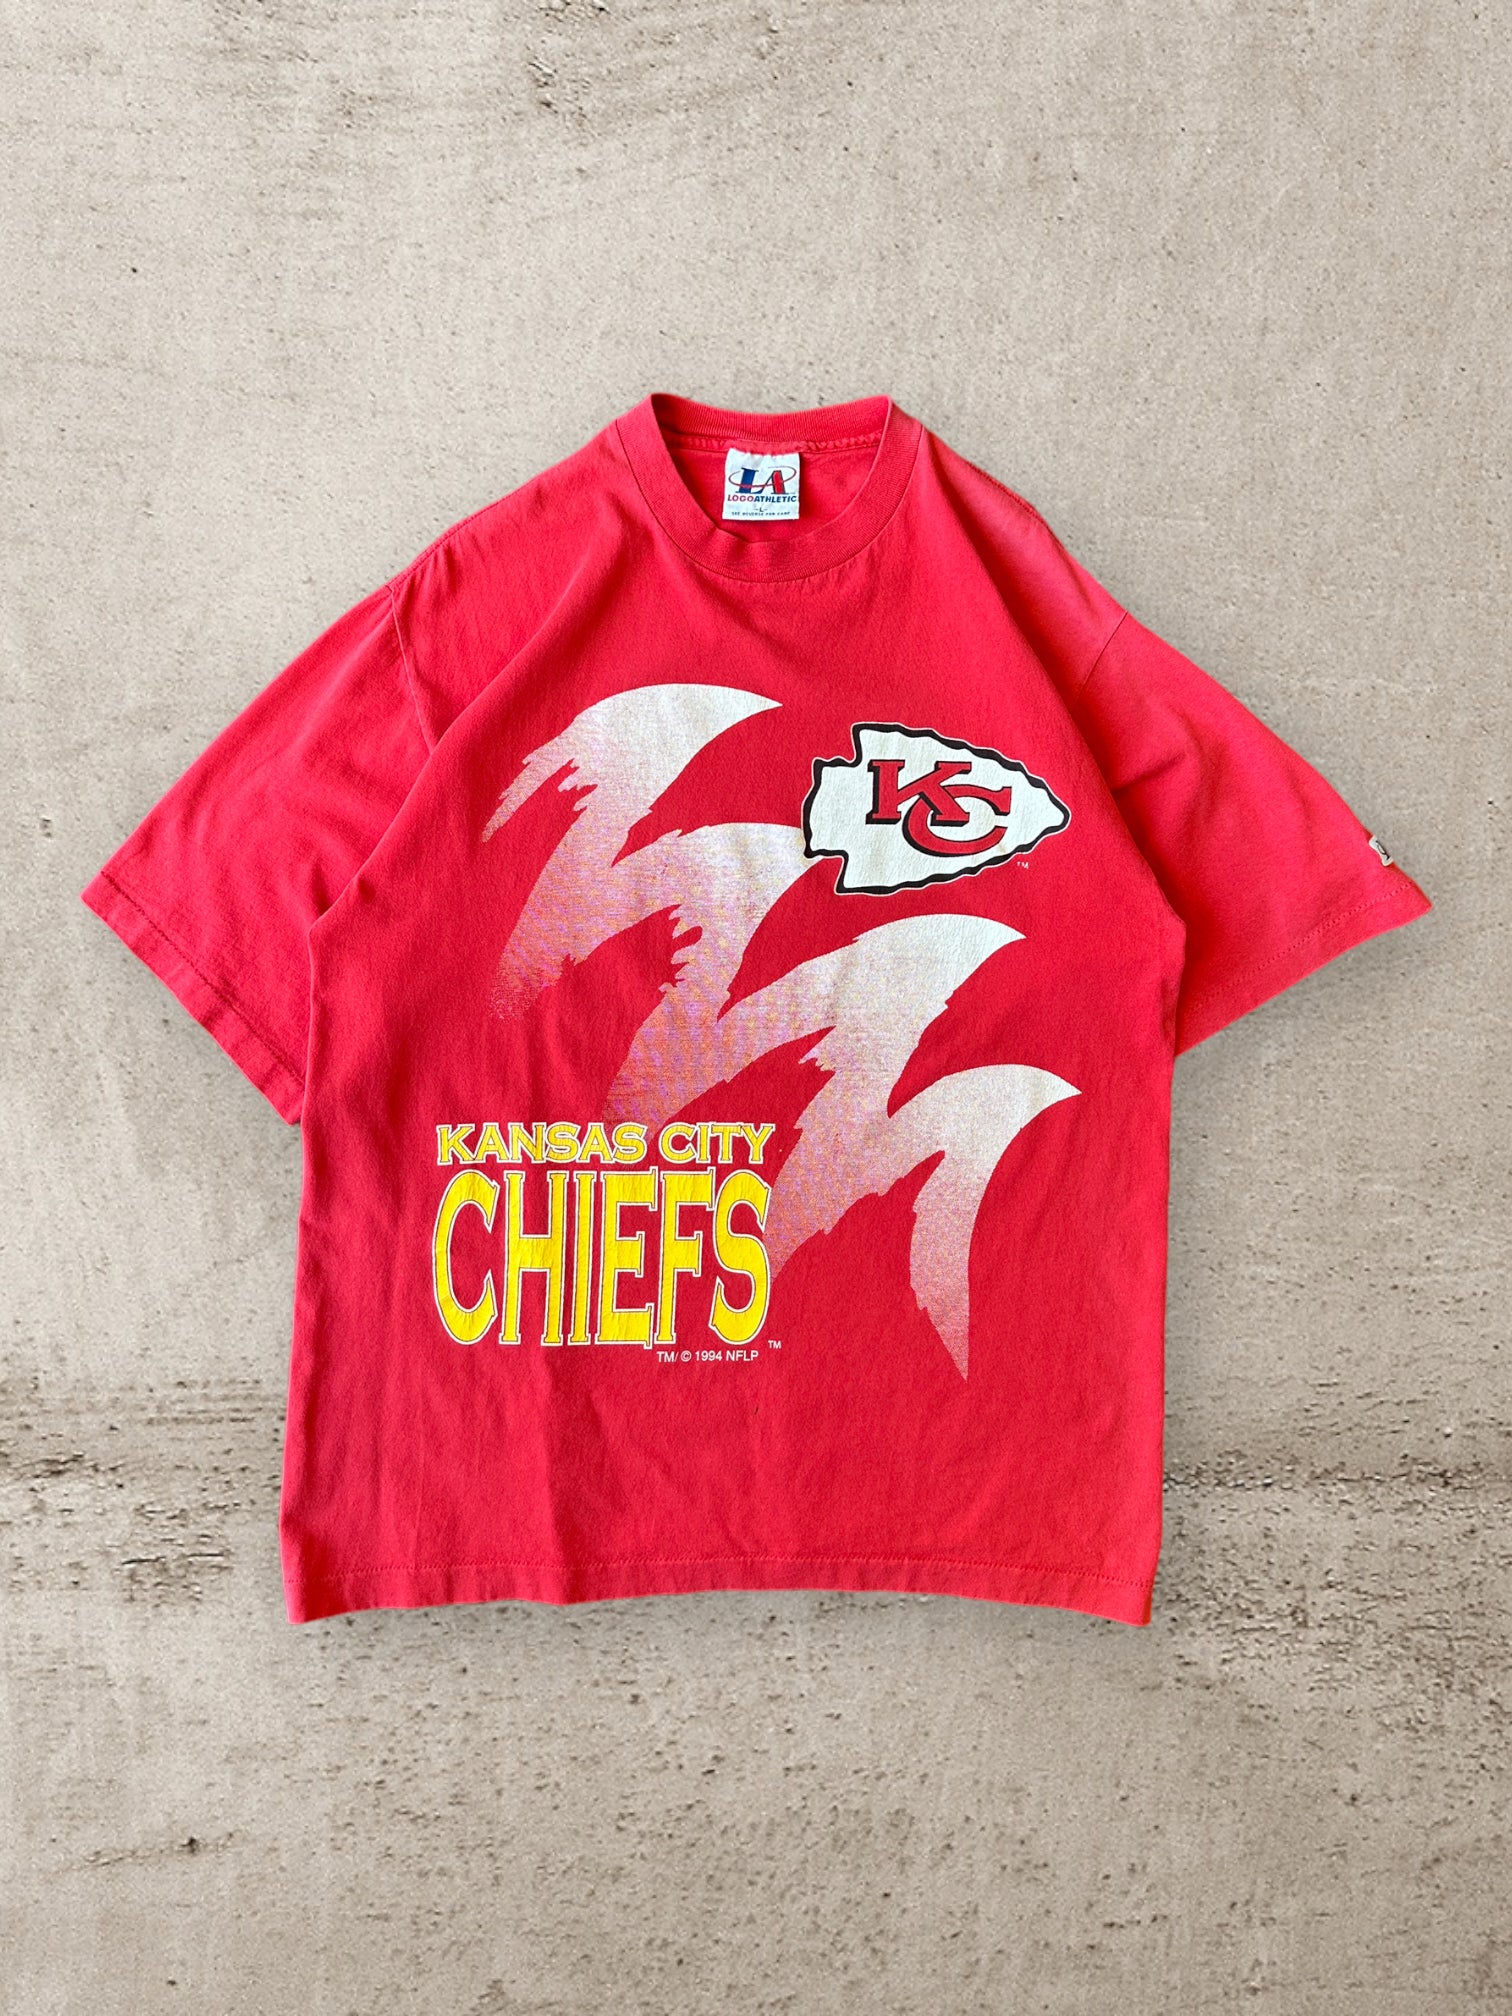 90s Kansas City Chiefs Graphic T-Shirt - Large